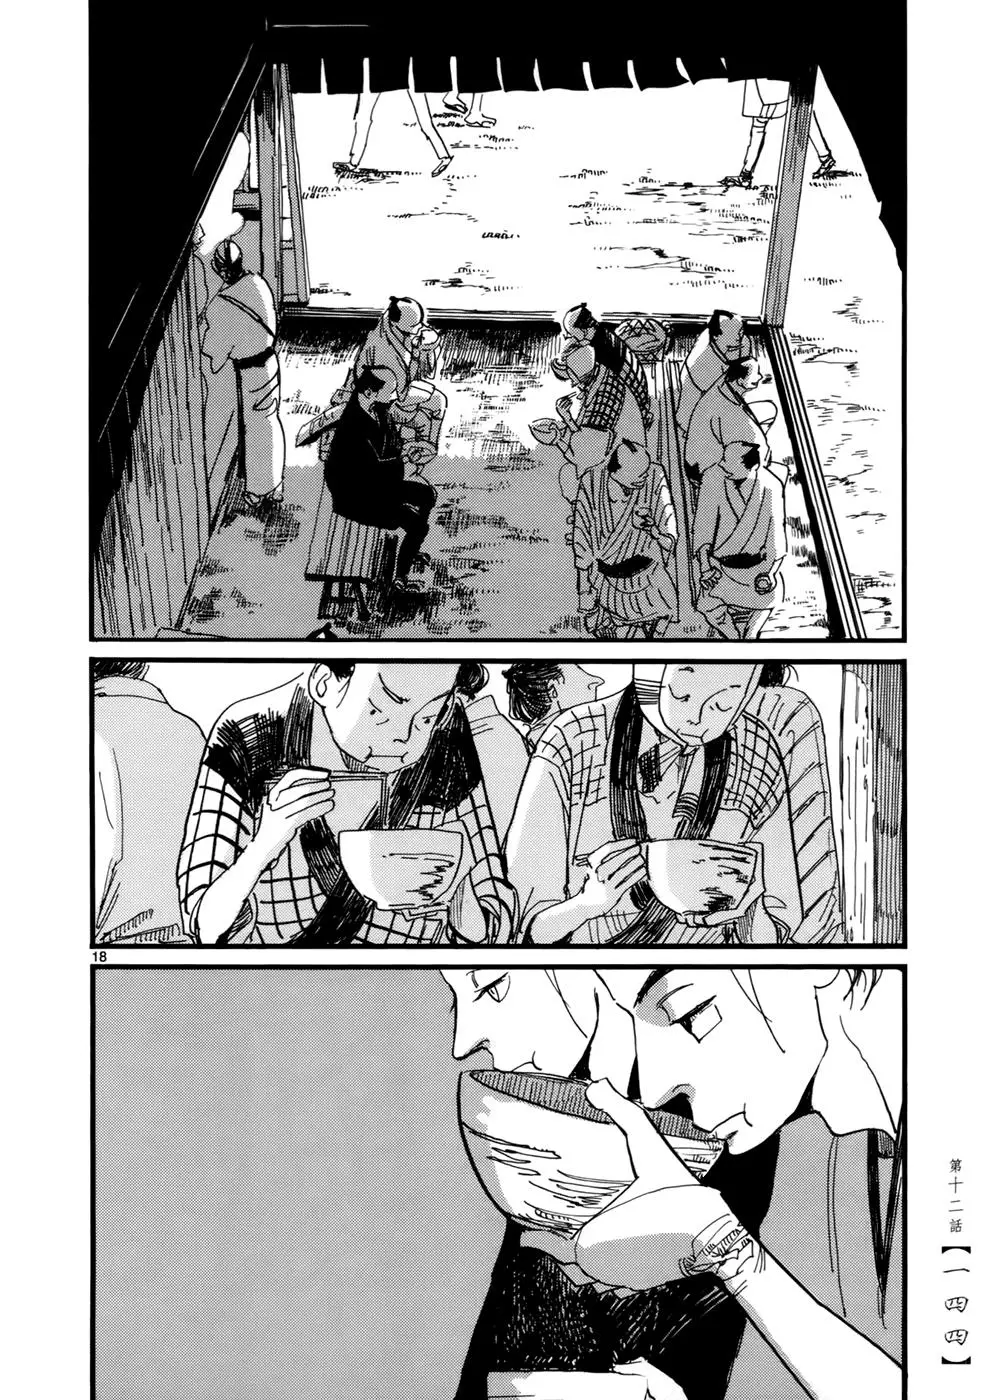 Futagashira - 12 page 19-8155c733